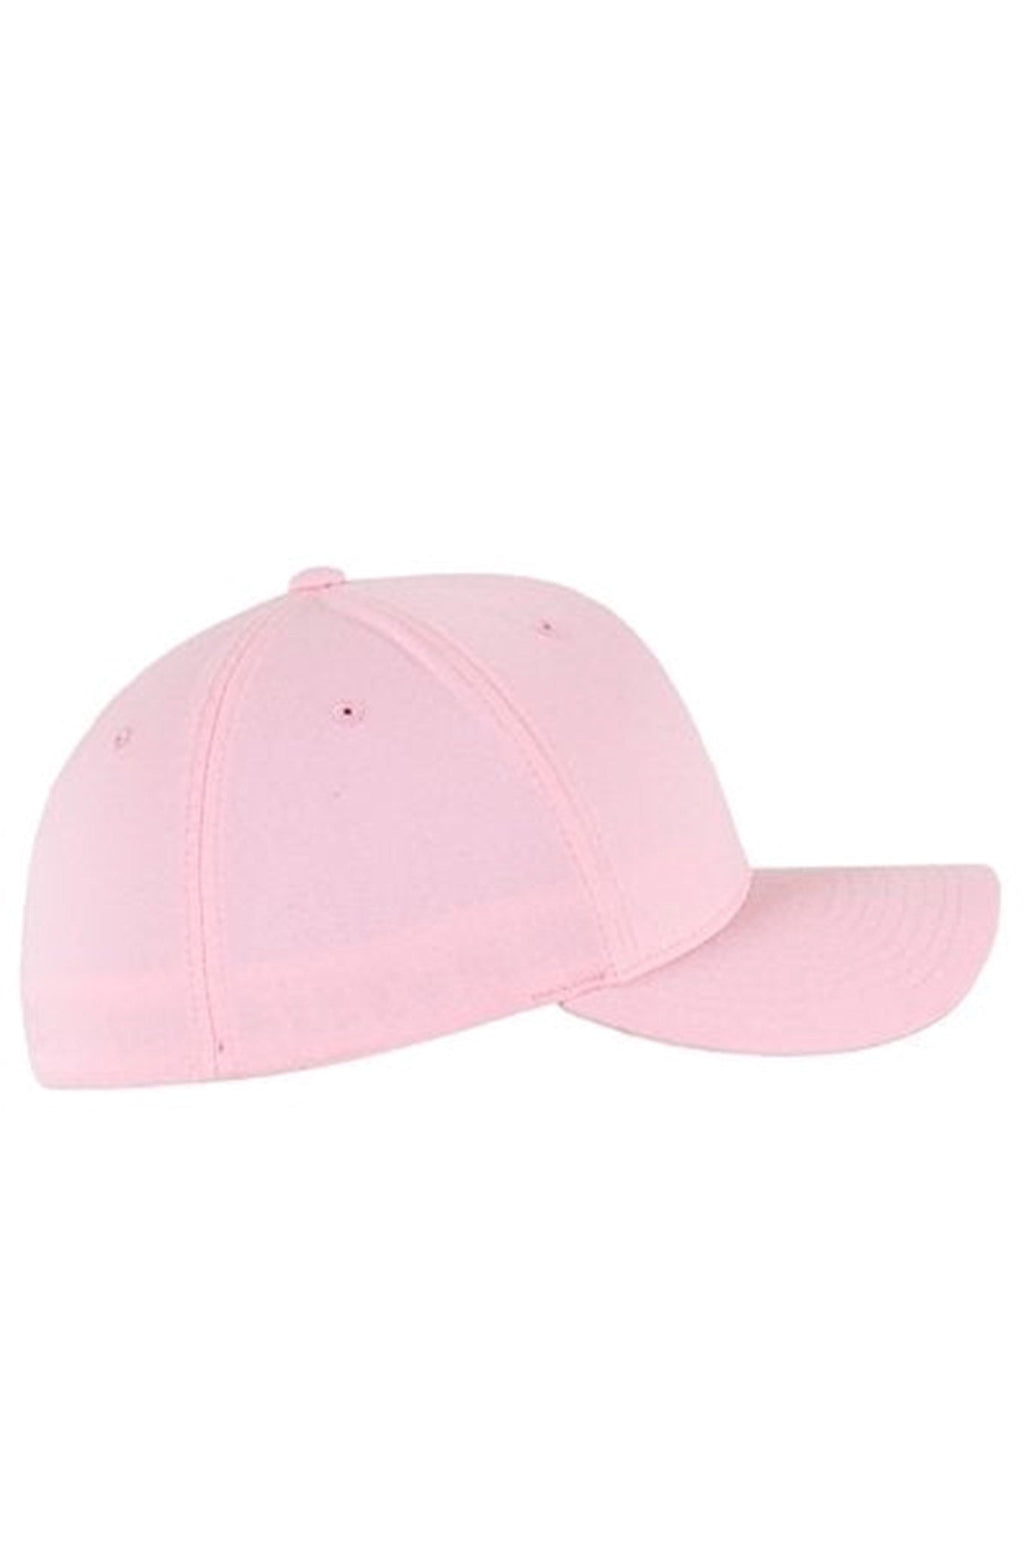 FlexFit Original Baseball Cap - Pink